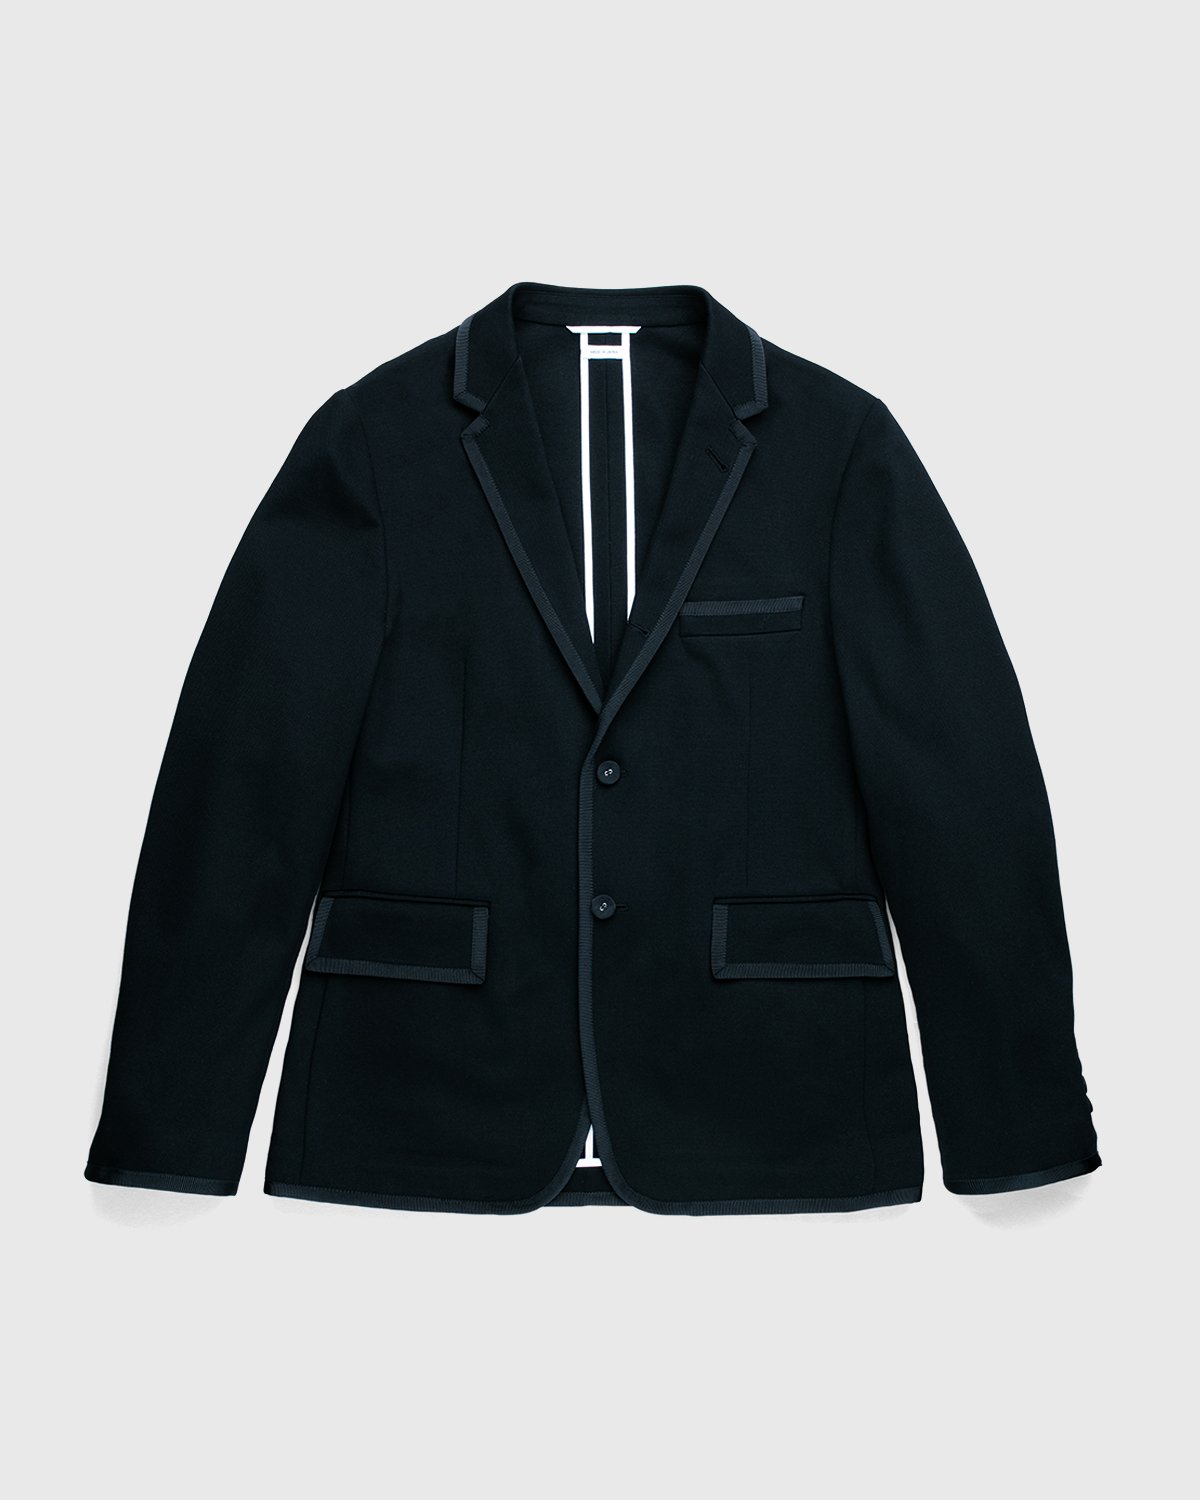 Thom Browne x Highsnobiety - Men Deconstructed Sport Jacket Black - Clothing - Black - Image 1